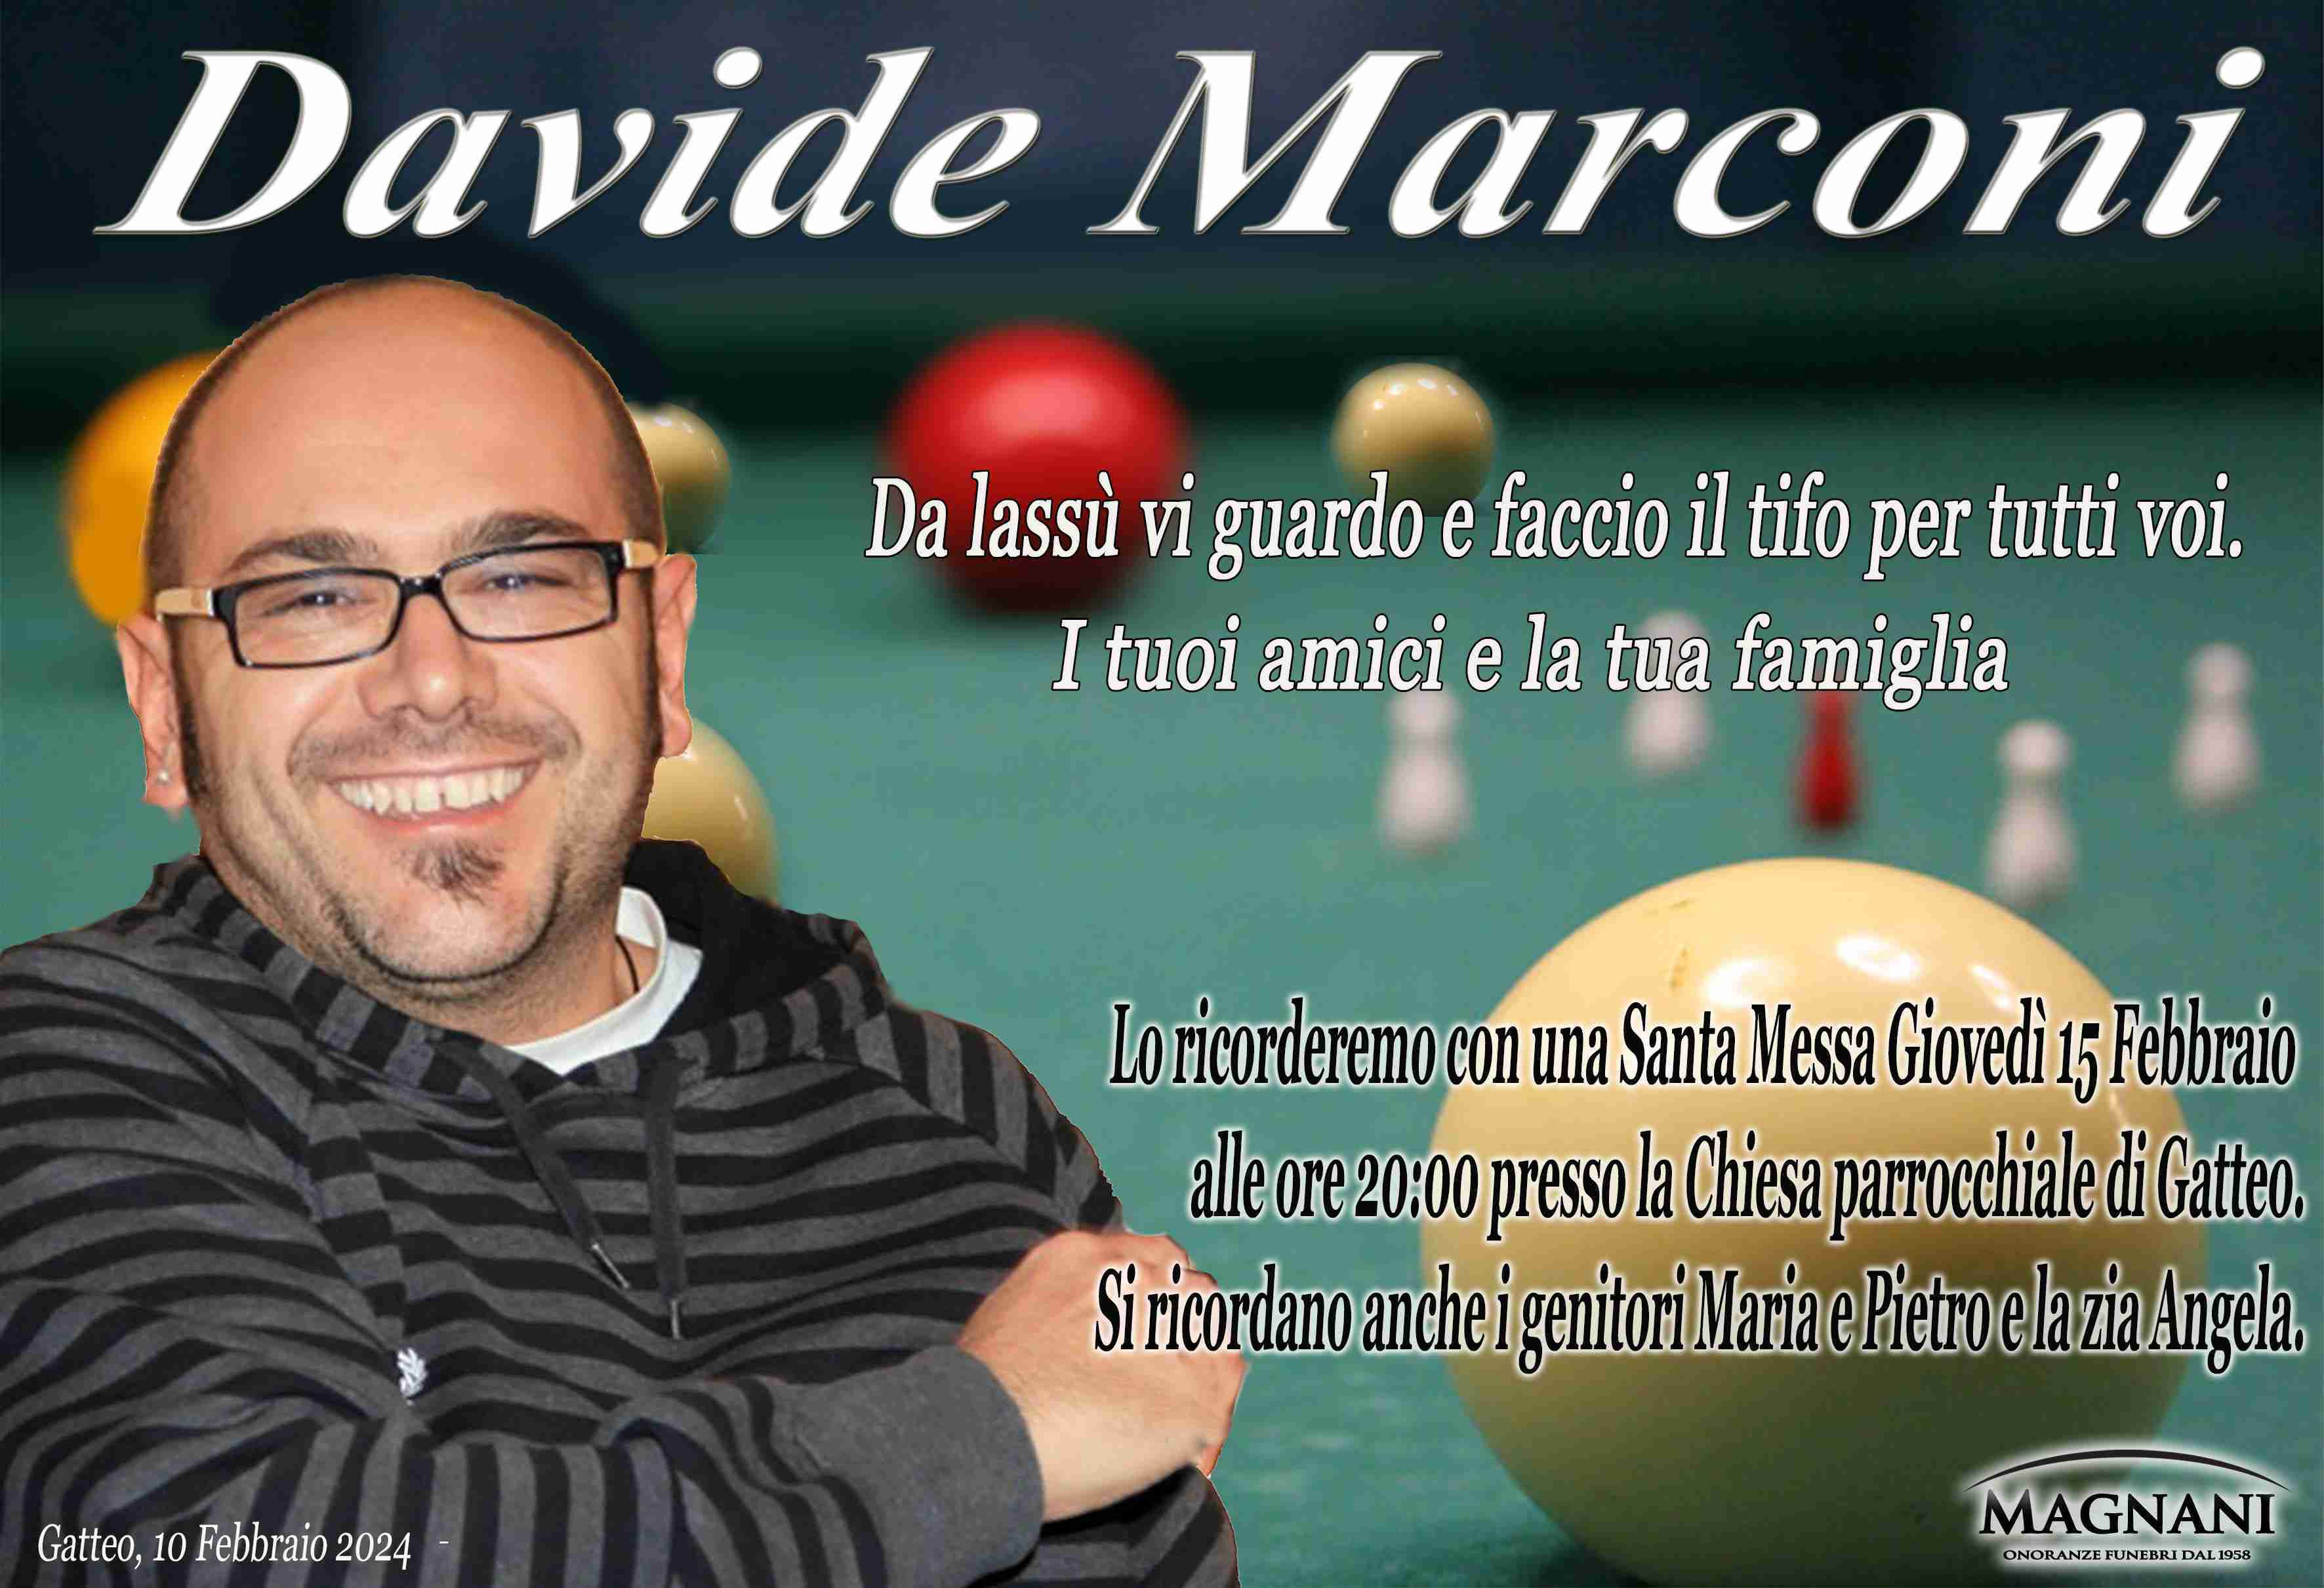 Davide Marconi